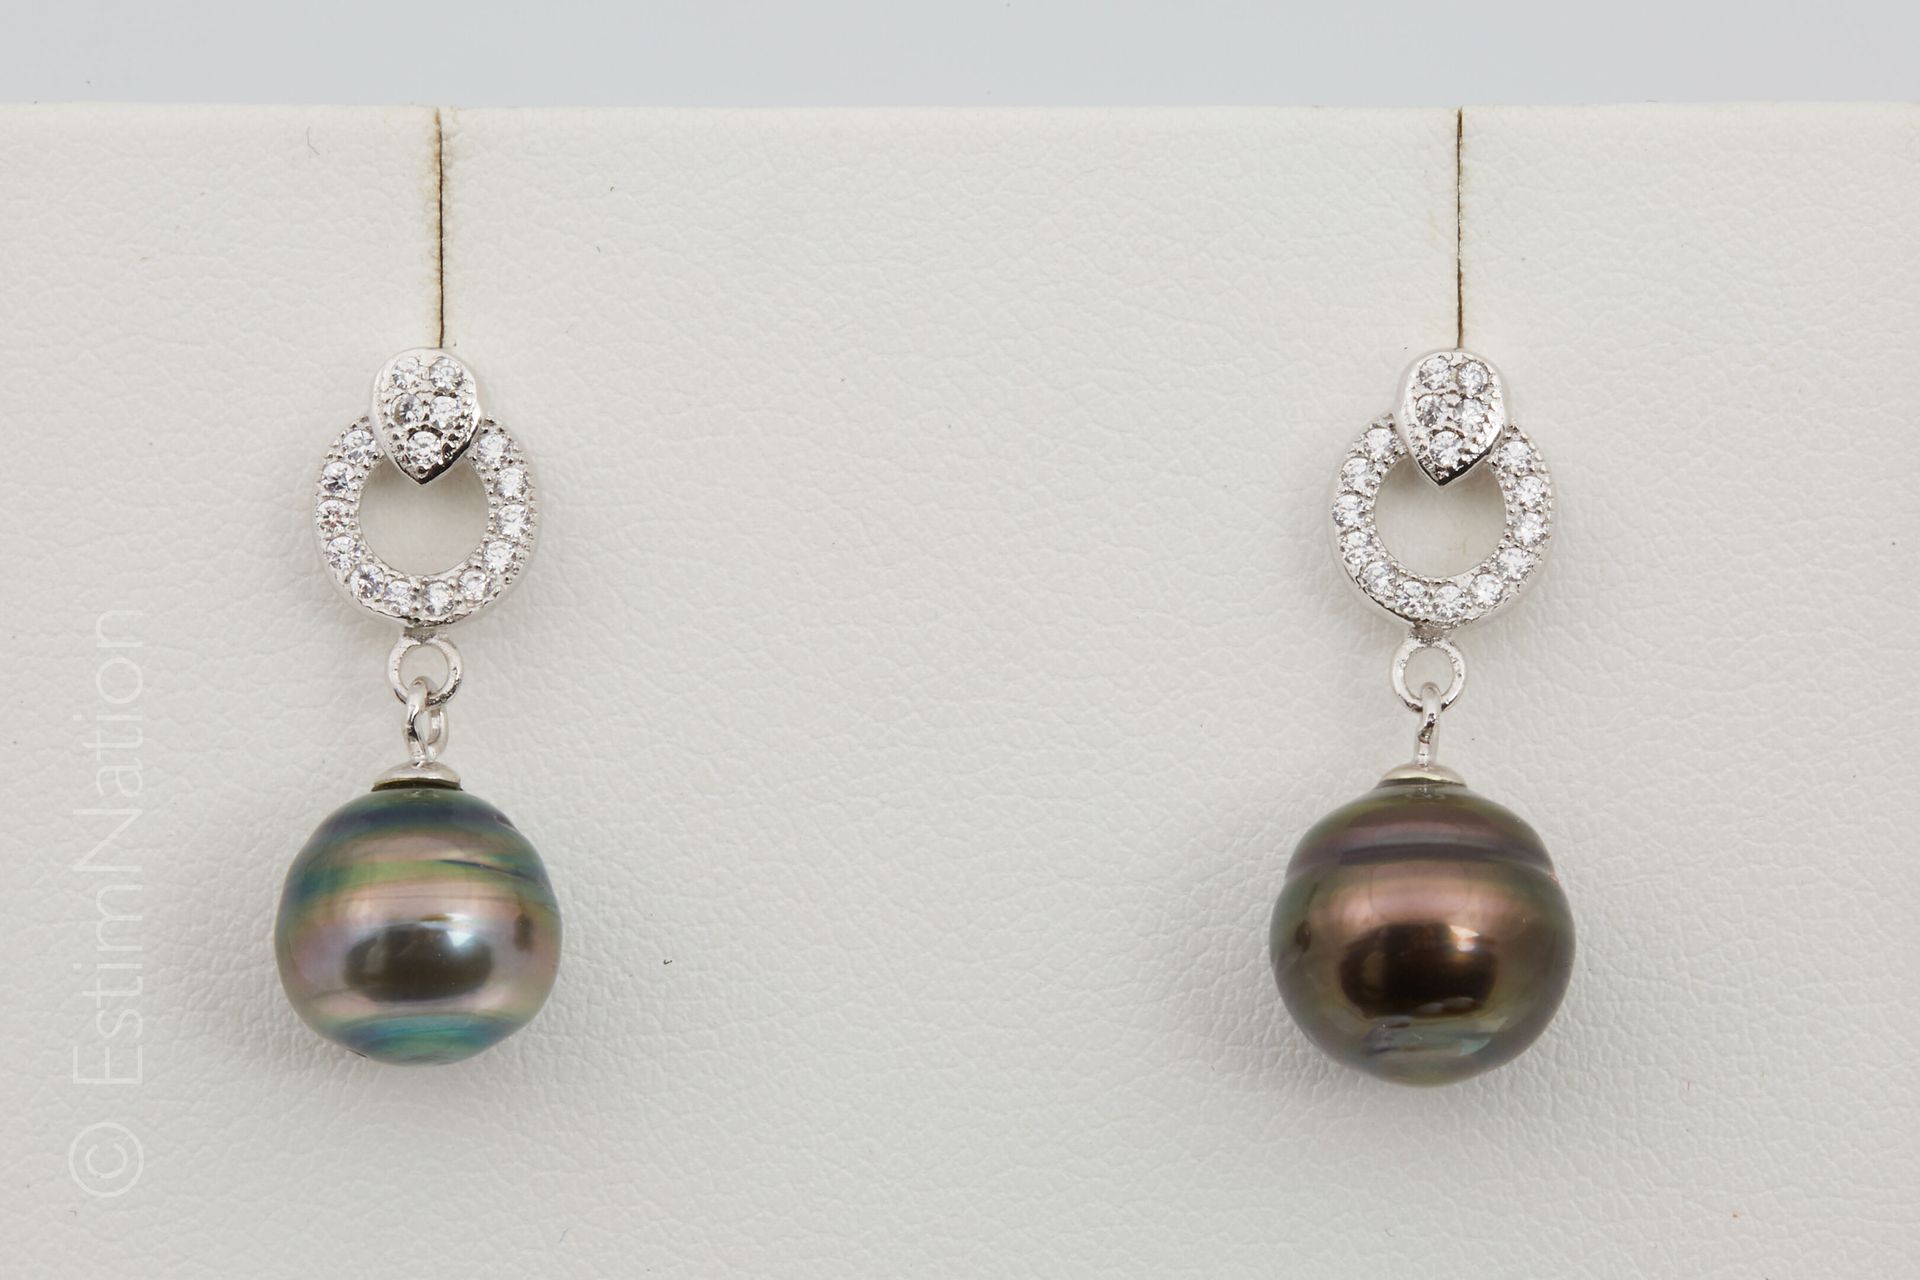 BOUCLES D'OREILLES PERLE TAHITI 一对925银耳环，圆形镂空设计，镶嵌着氧化锆，托着一颗大溪地珍珠。

毛重：3.90克 - 高度&hellip;